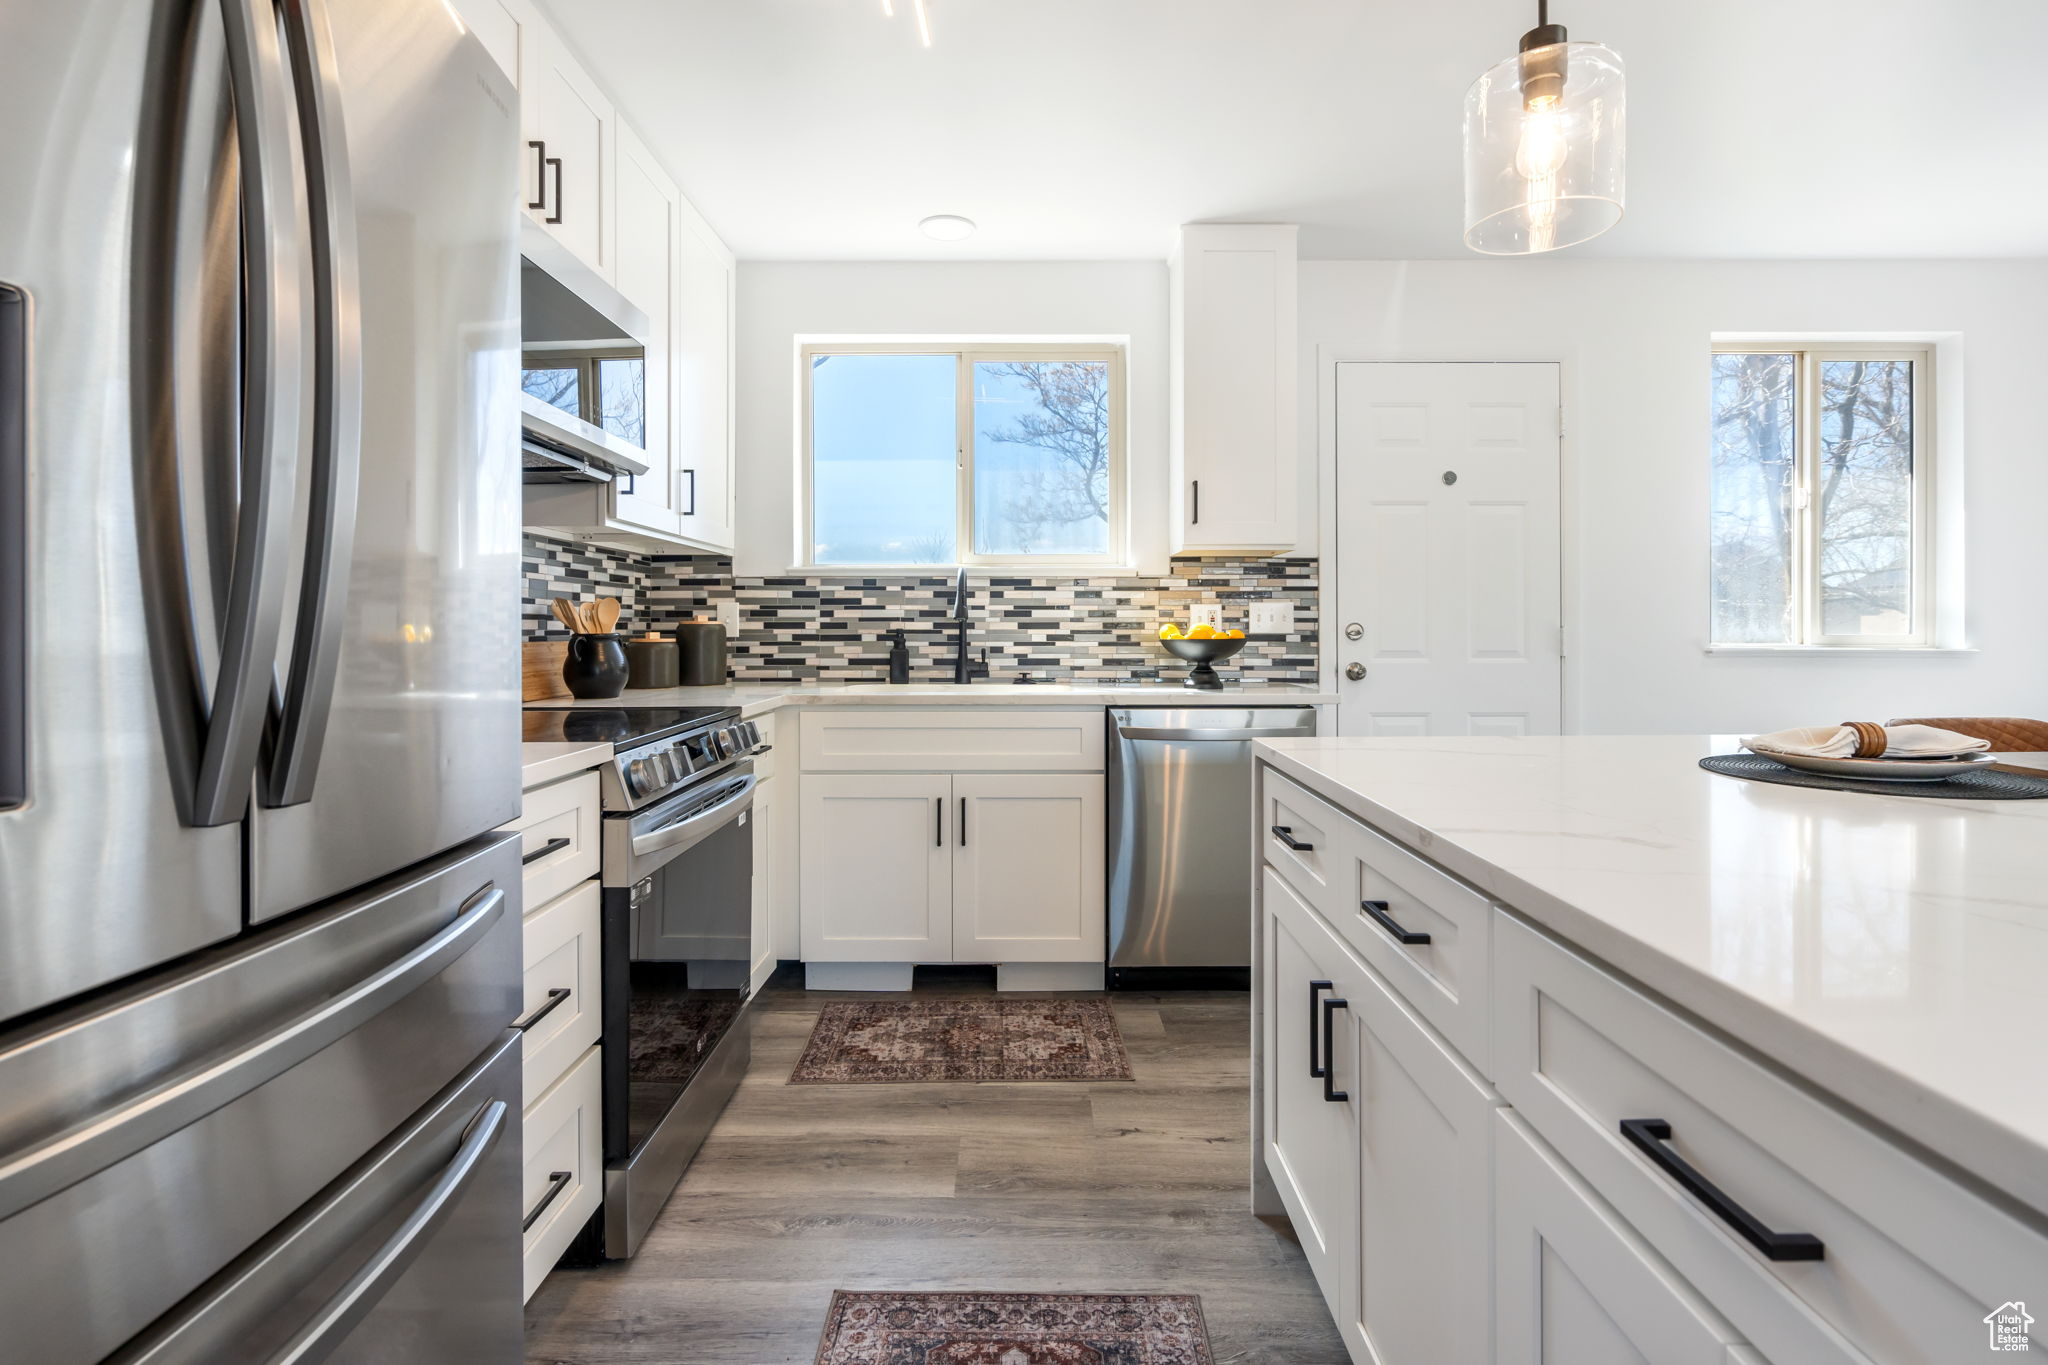 Kitchen with white cabinets, backsplash, dark hardwood / wood-style floors, and stainless steel appliances